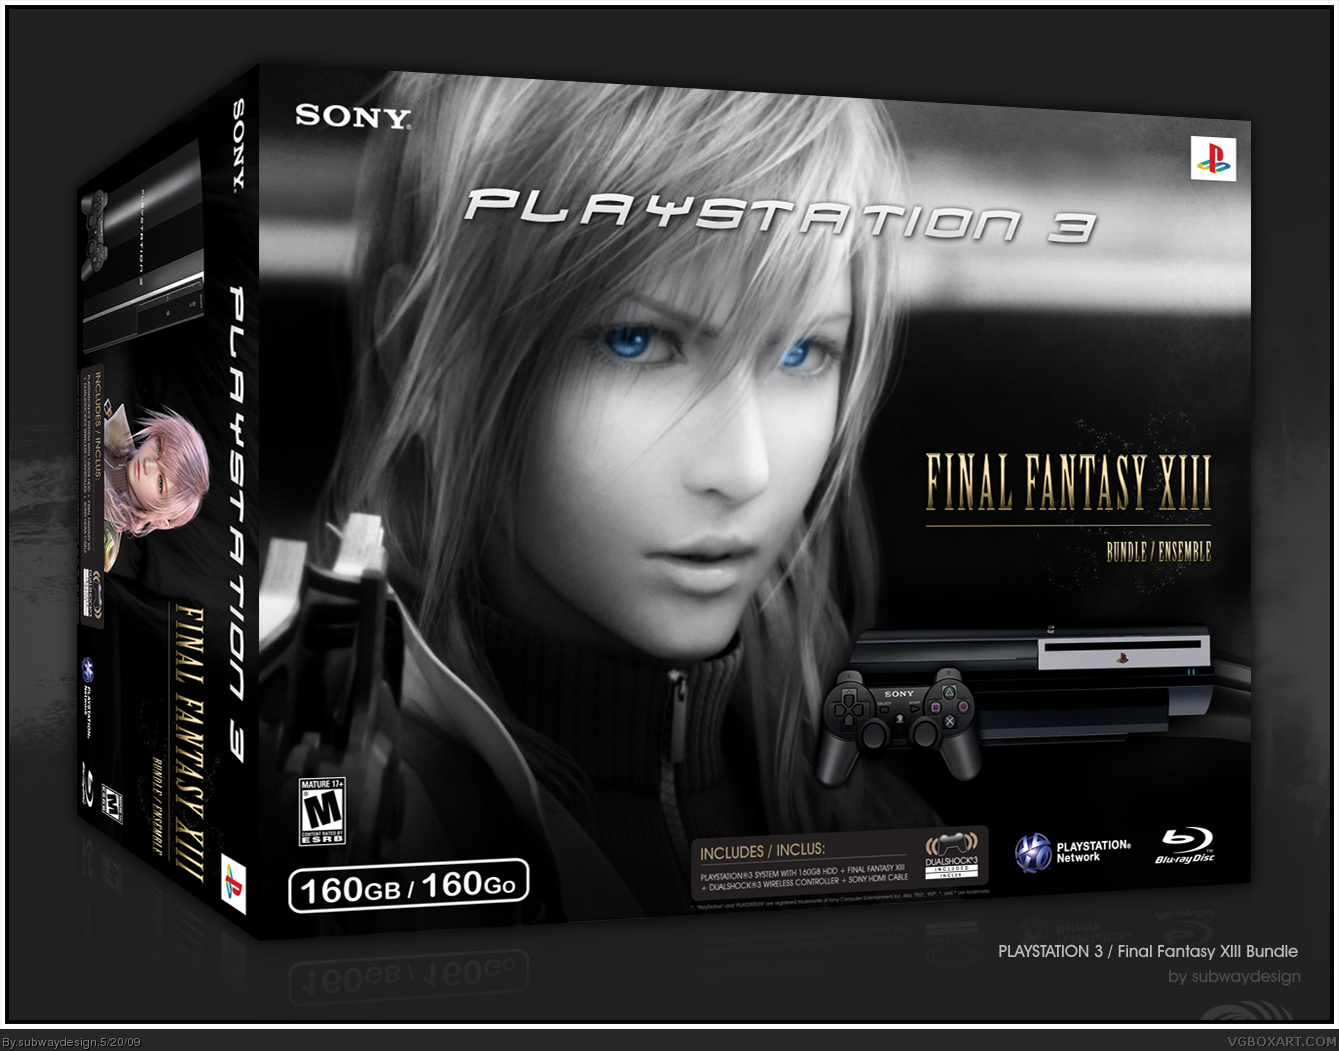 Final Fantasy XIII Bundle box cover